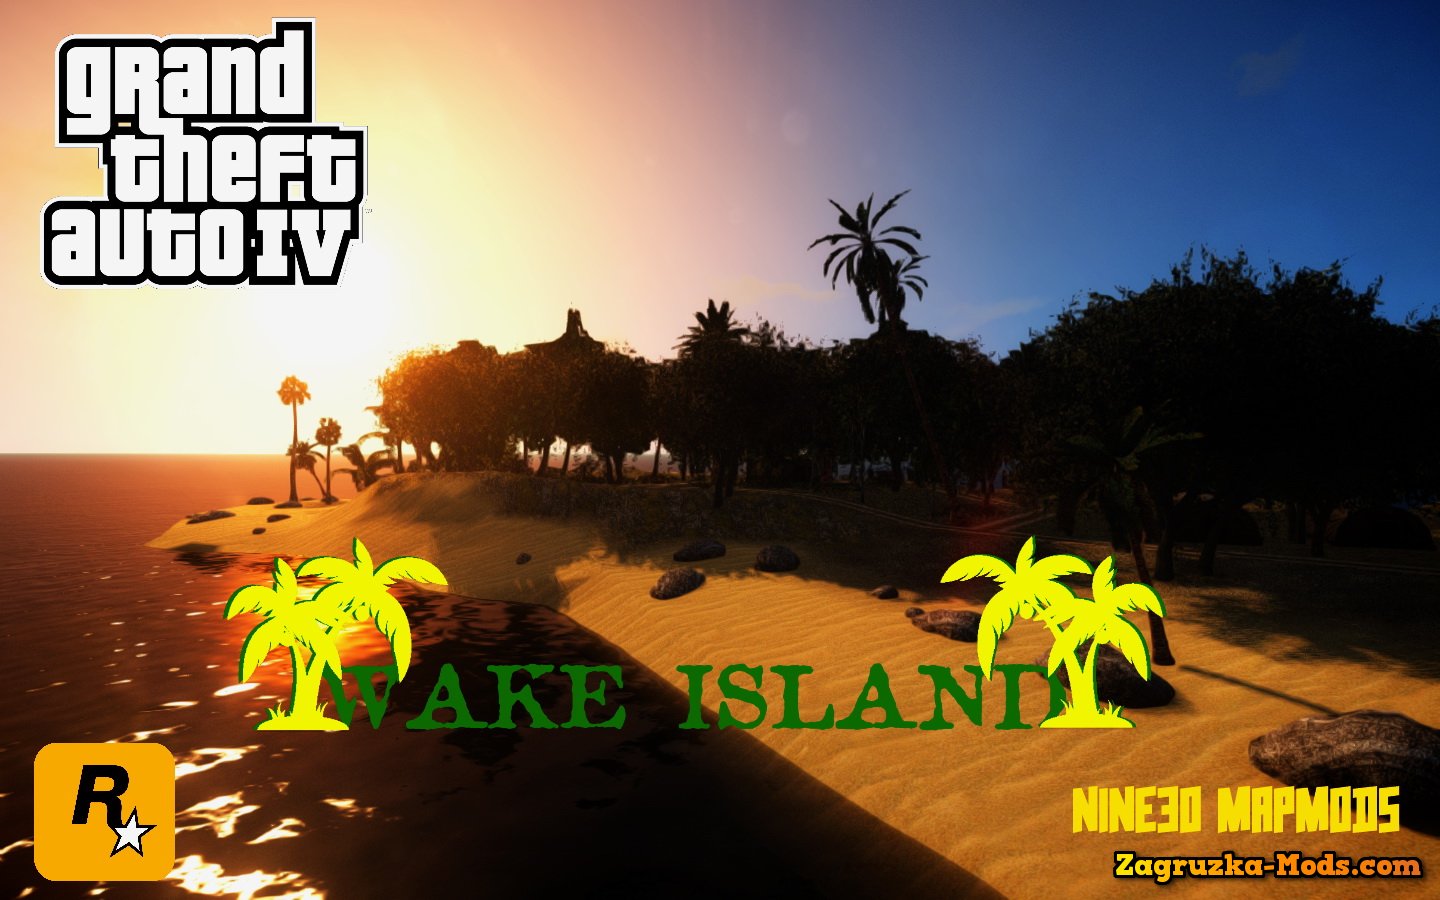 Wake Island by nine30 for GTA 4